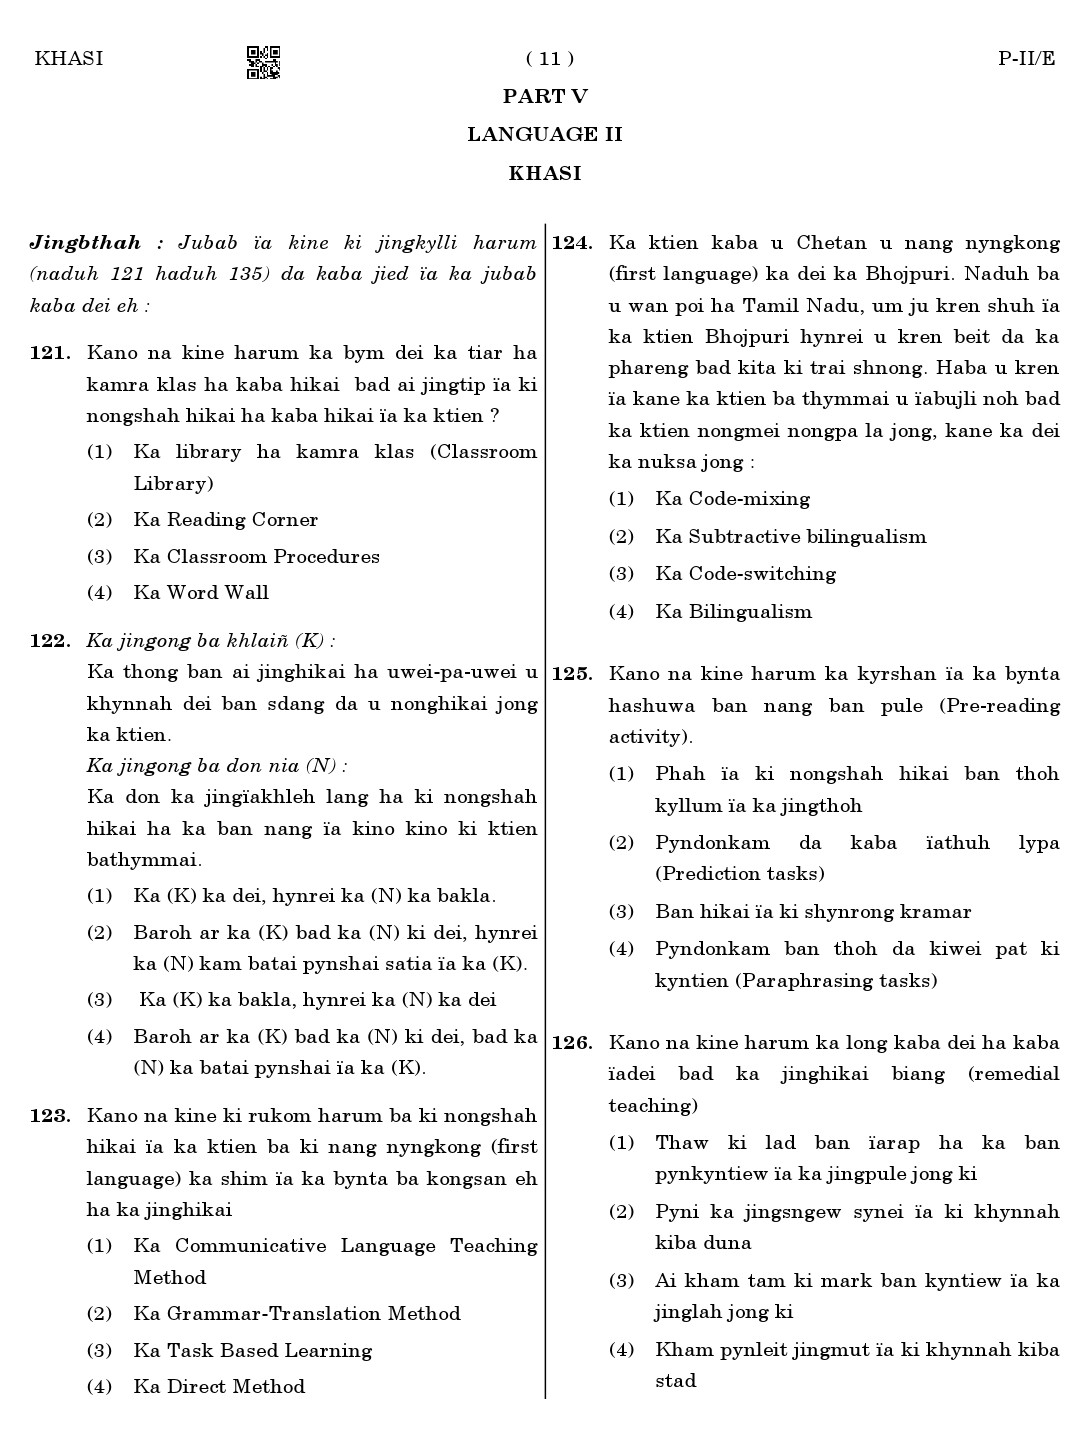 CTET August 2023 Khasi Language Supplement Paper II Part IV and V 11